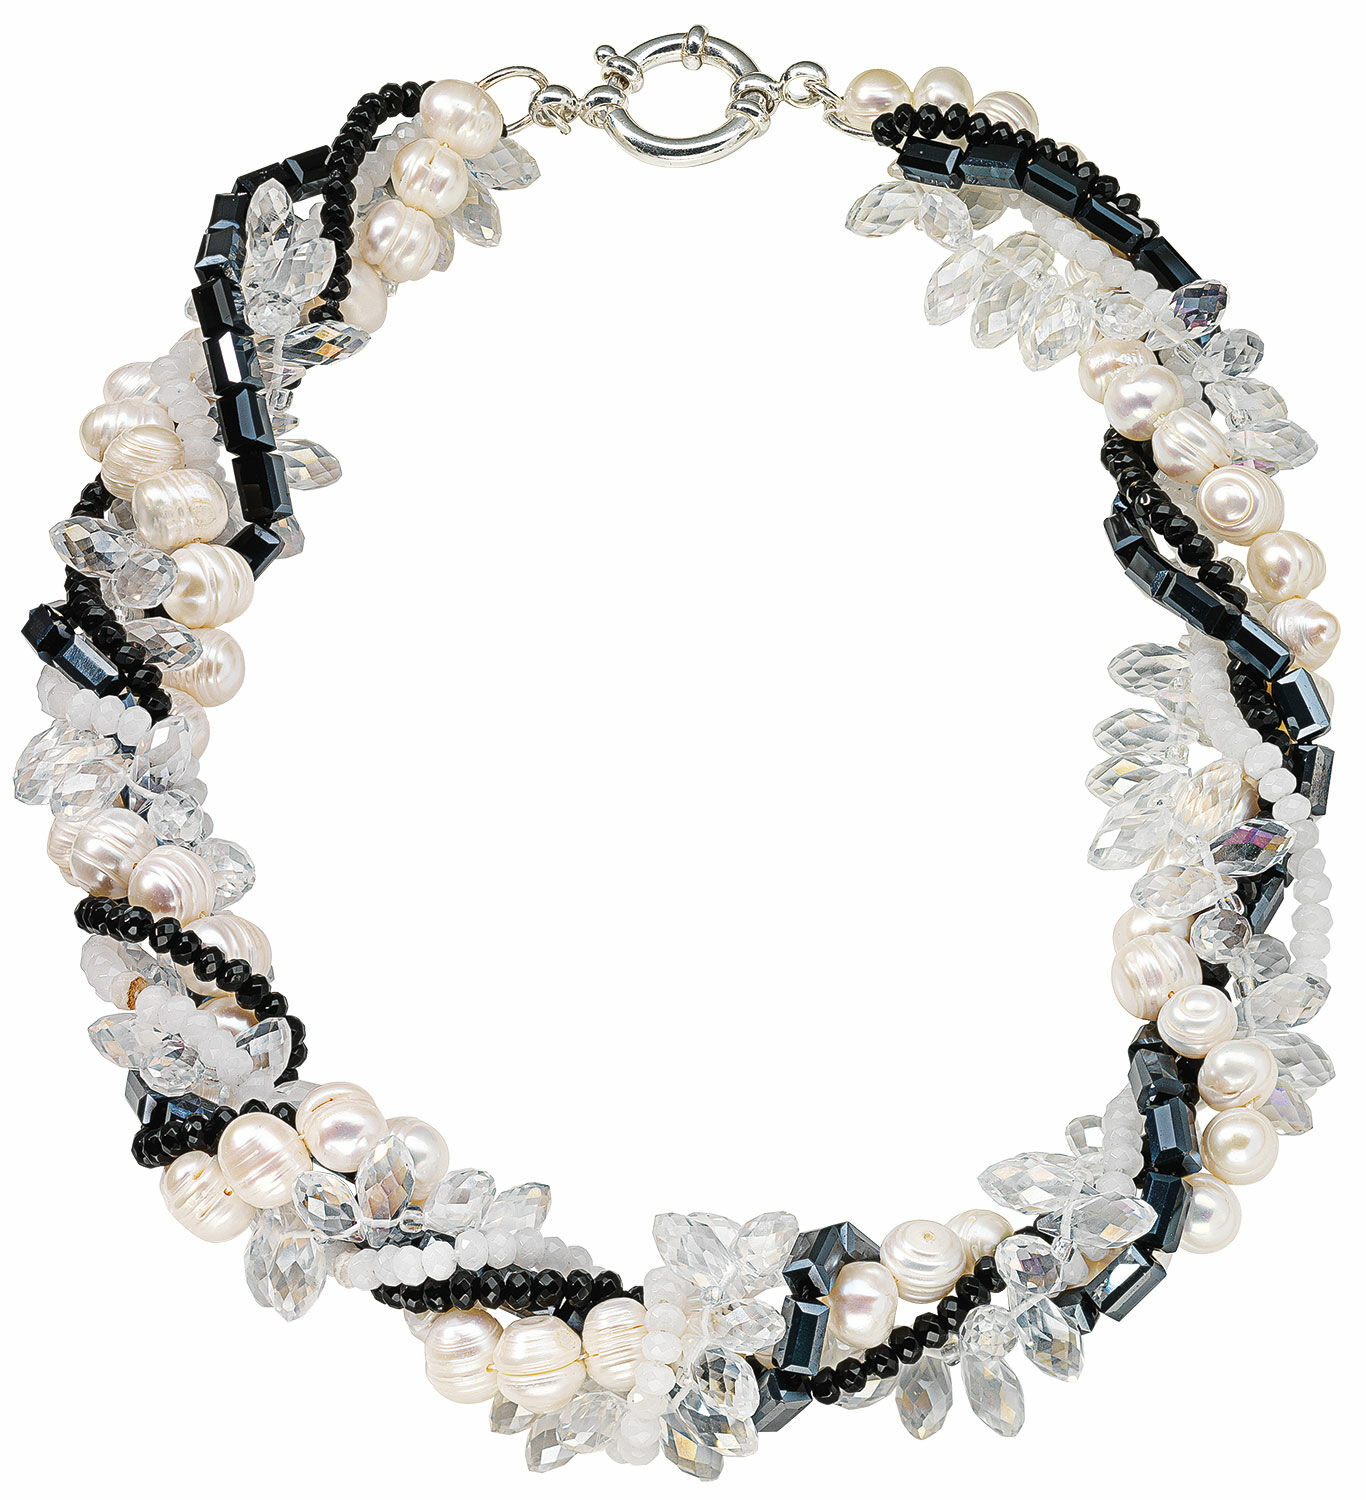 Necklace "Glamour" by Petra Waszak